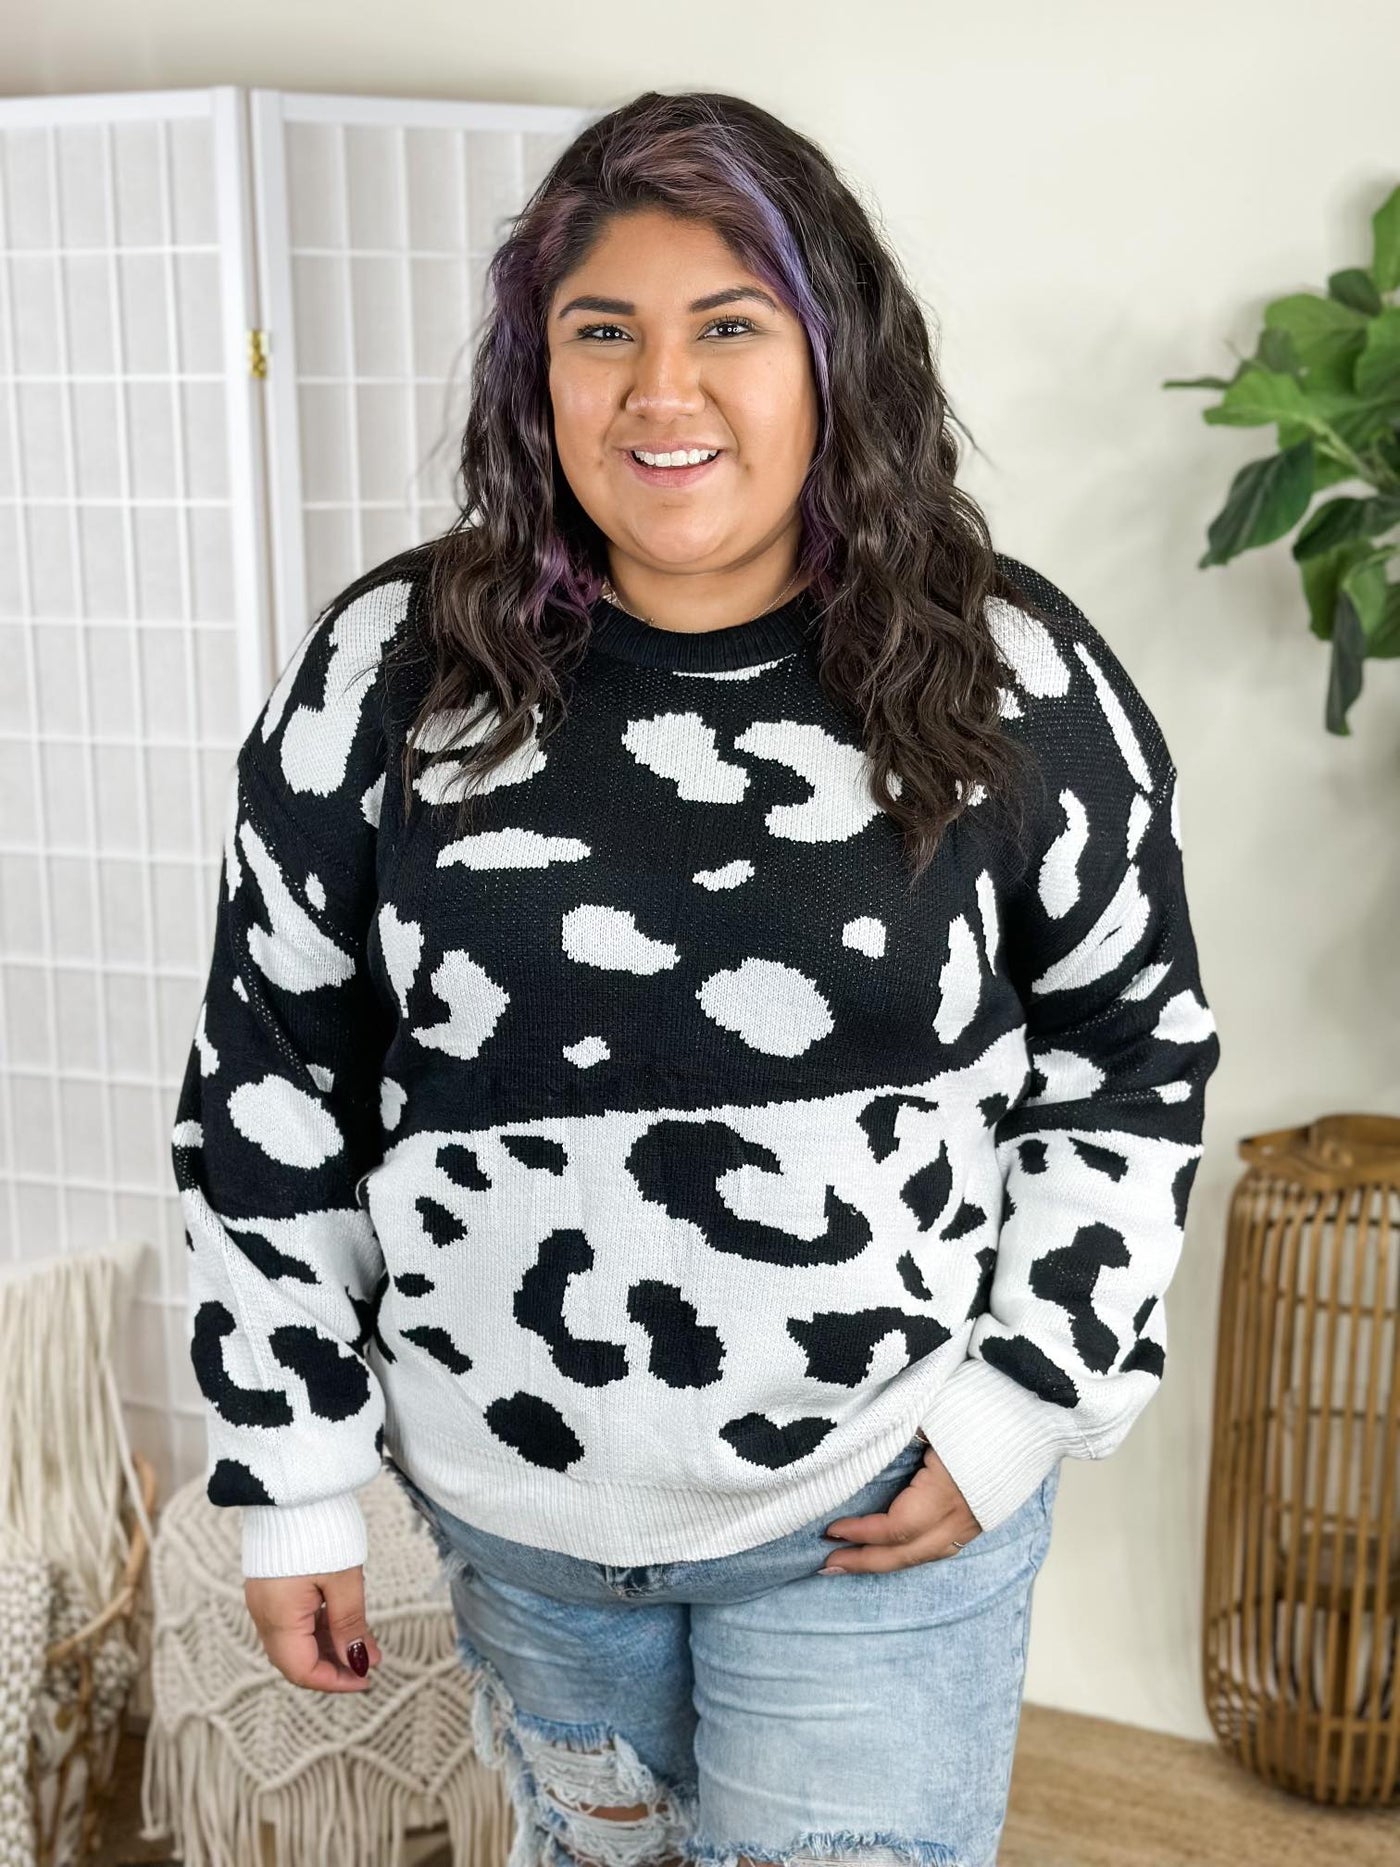 PREORDER: Leopard Block Sweater in Black